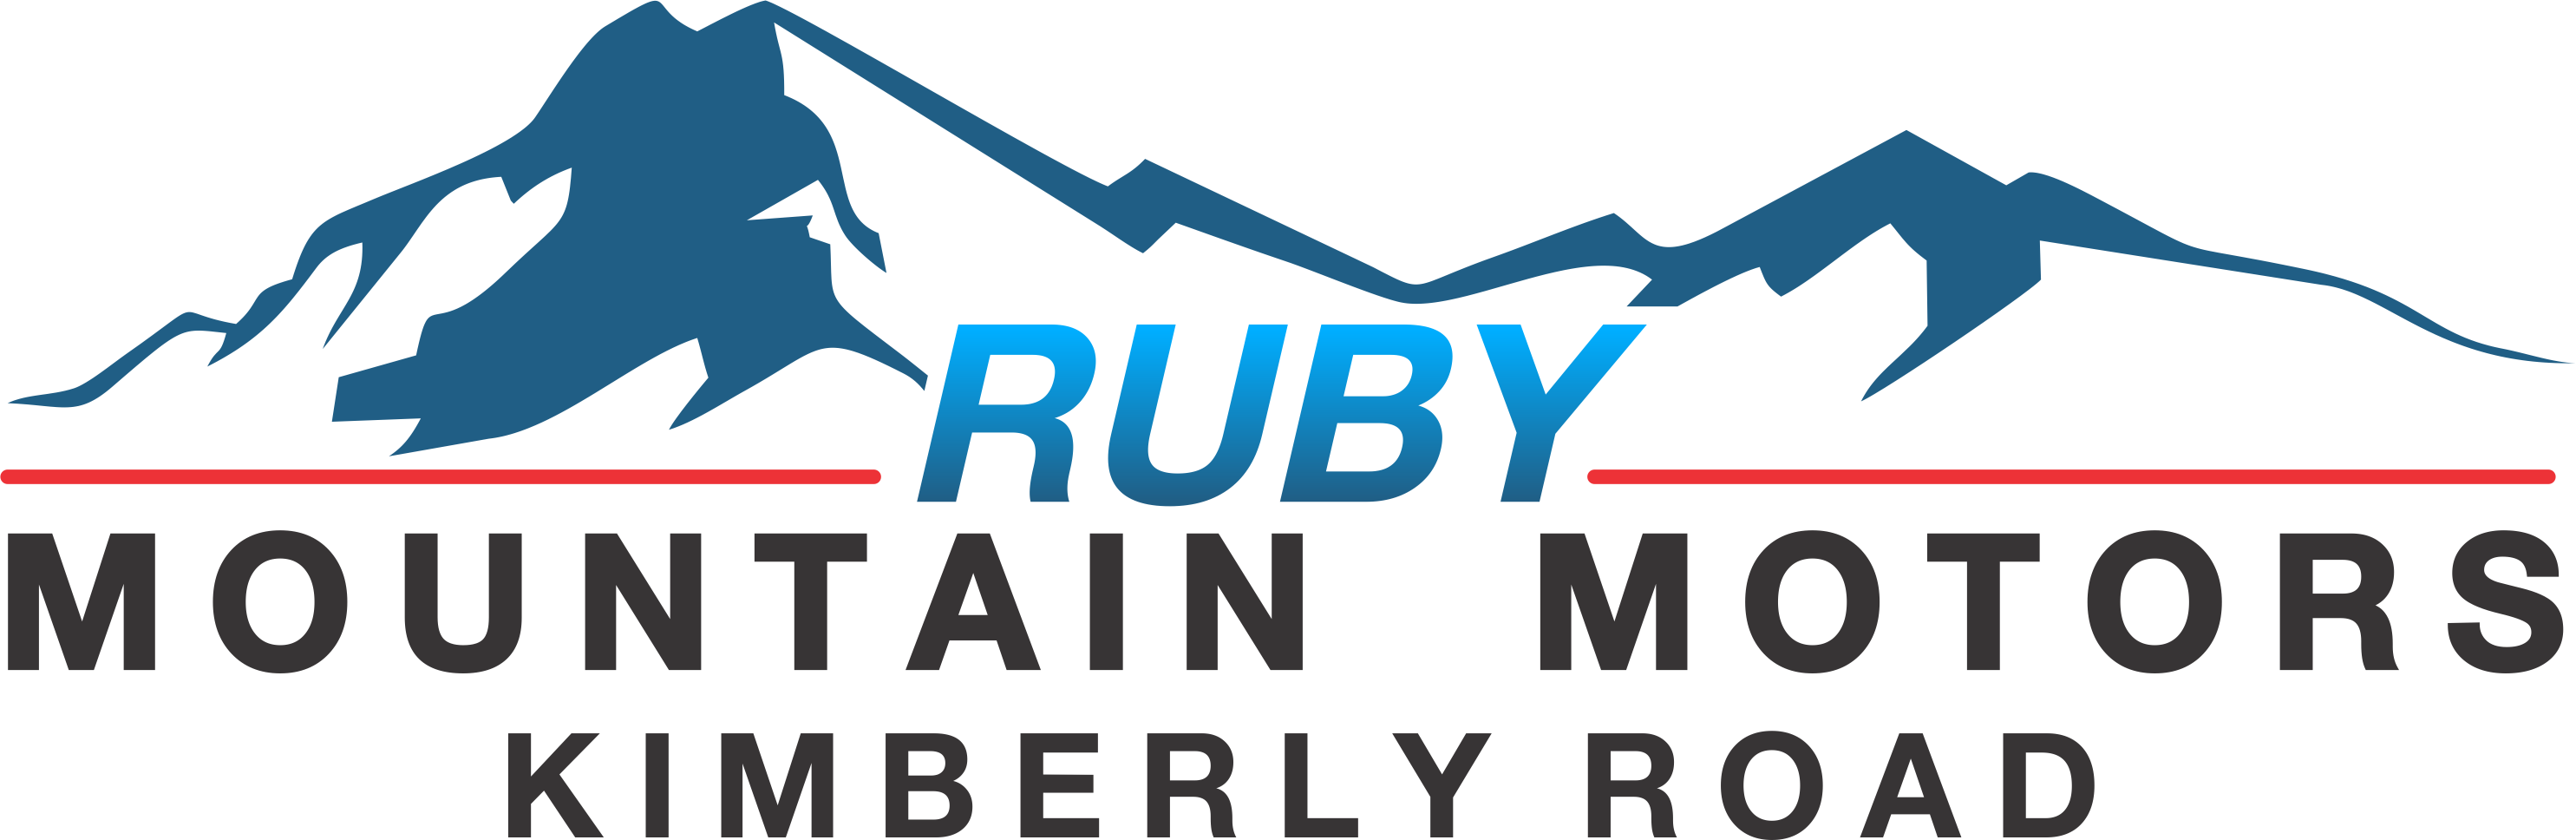 Ruby Mountain Motors Twin Falls, ID